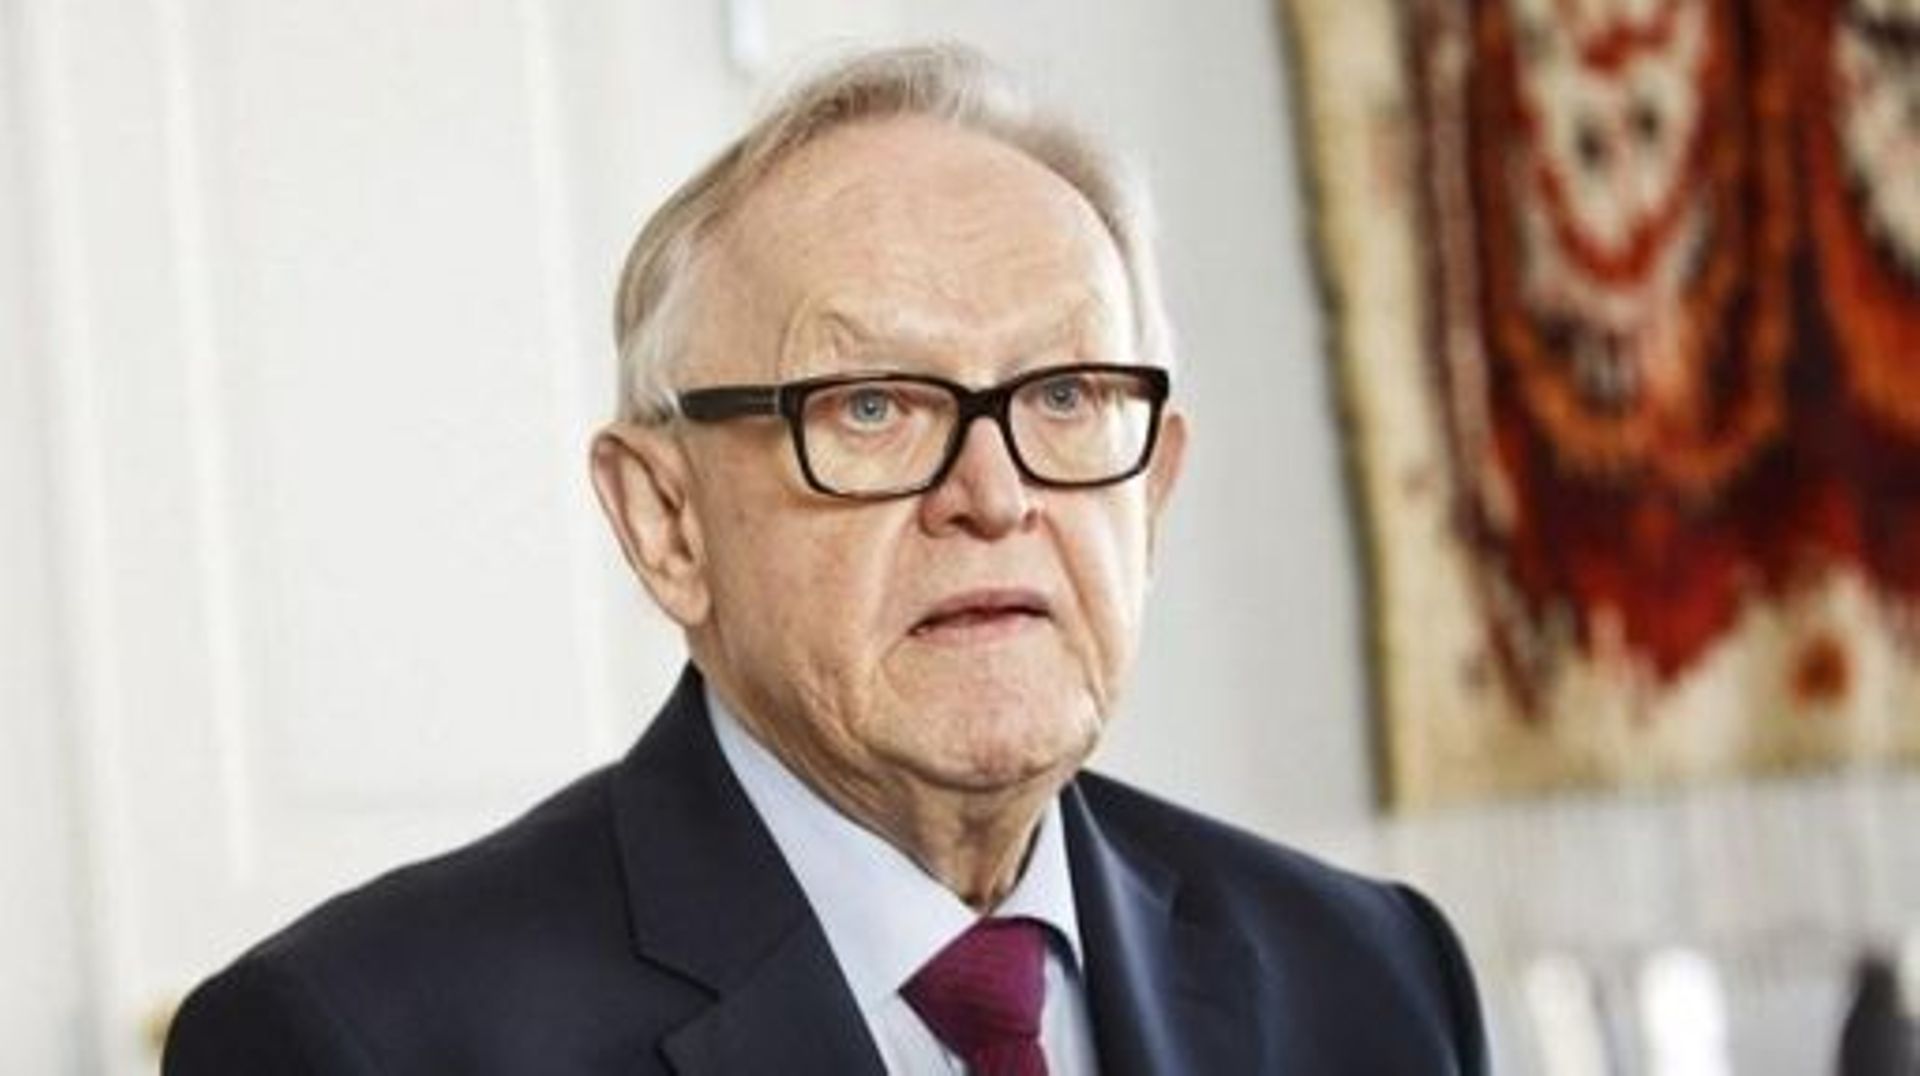 Former Finnish President Martti Ahtisaari attends a luncheon of political journalists, in Helsinki on February 16, 2016.   Roni Rekomaa / Lehtikuva / AFP Finland OUT

